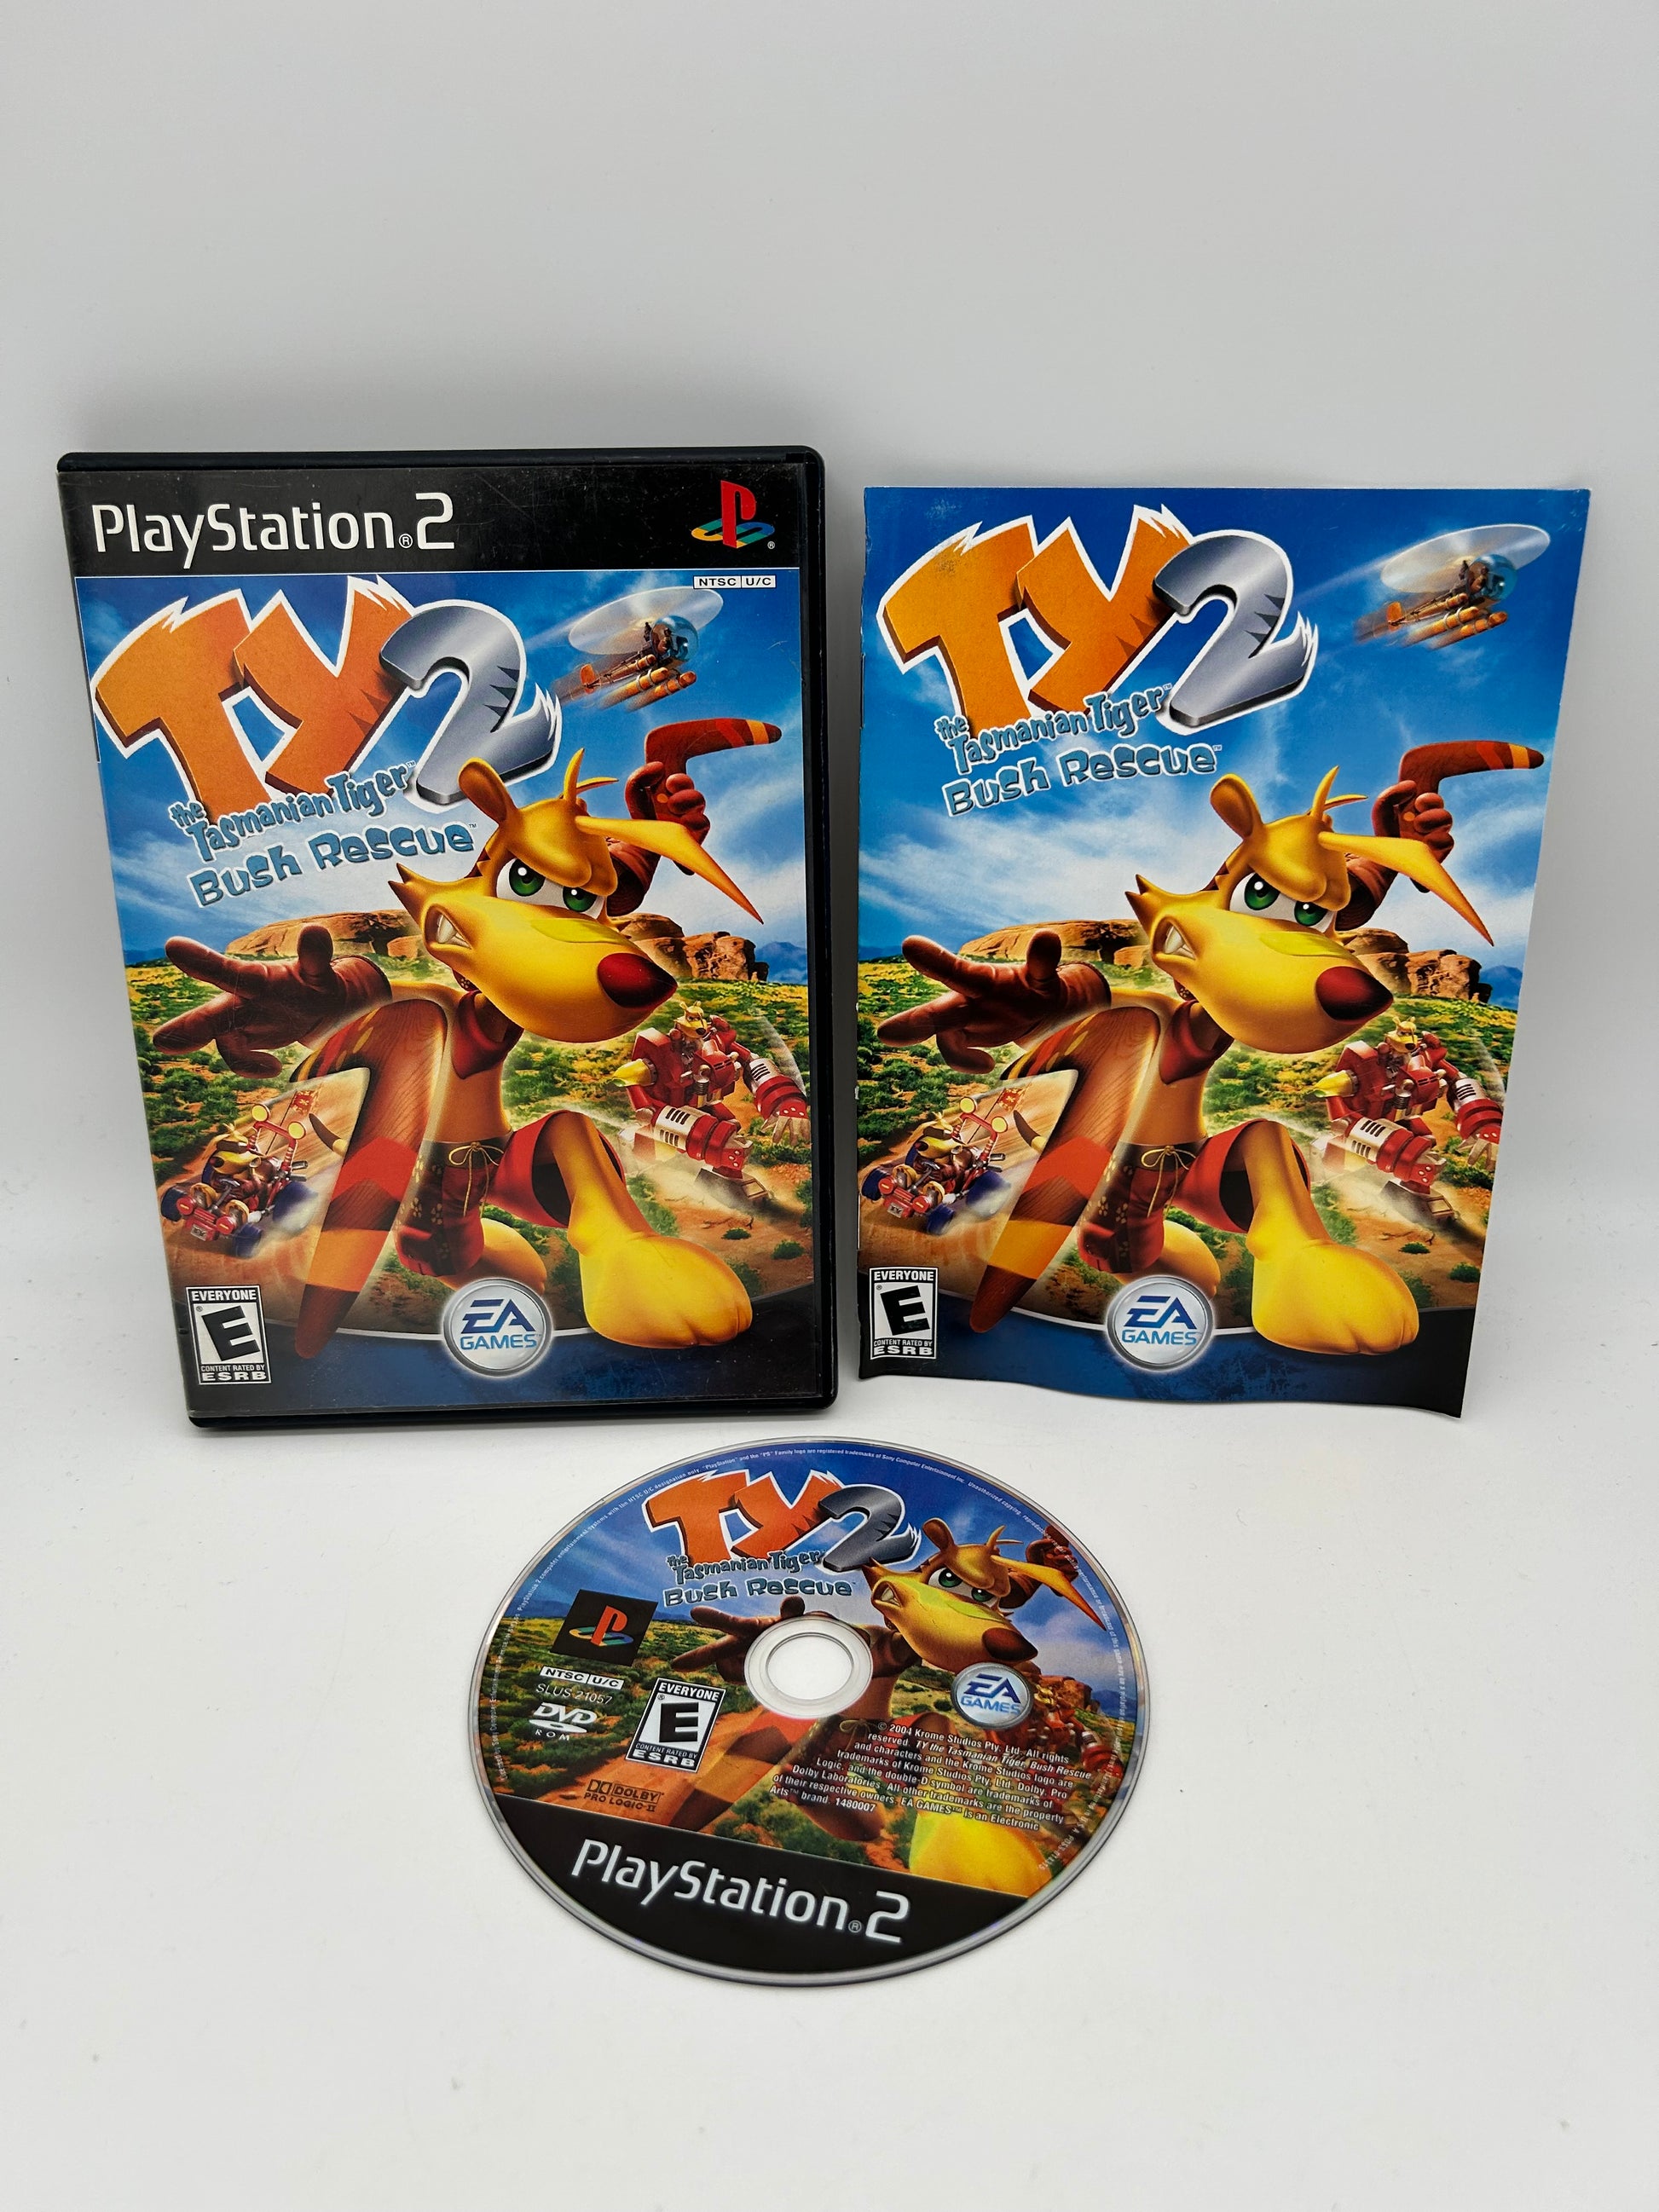 PiXEL-RETRO.COM : SONY PLAYSTATION 2 (PS2) COMPLET CIB BOX MANUAL GAME NTSC TY THE TASMANIAN TIGER 2 BUSH RESCUE